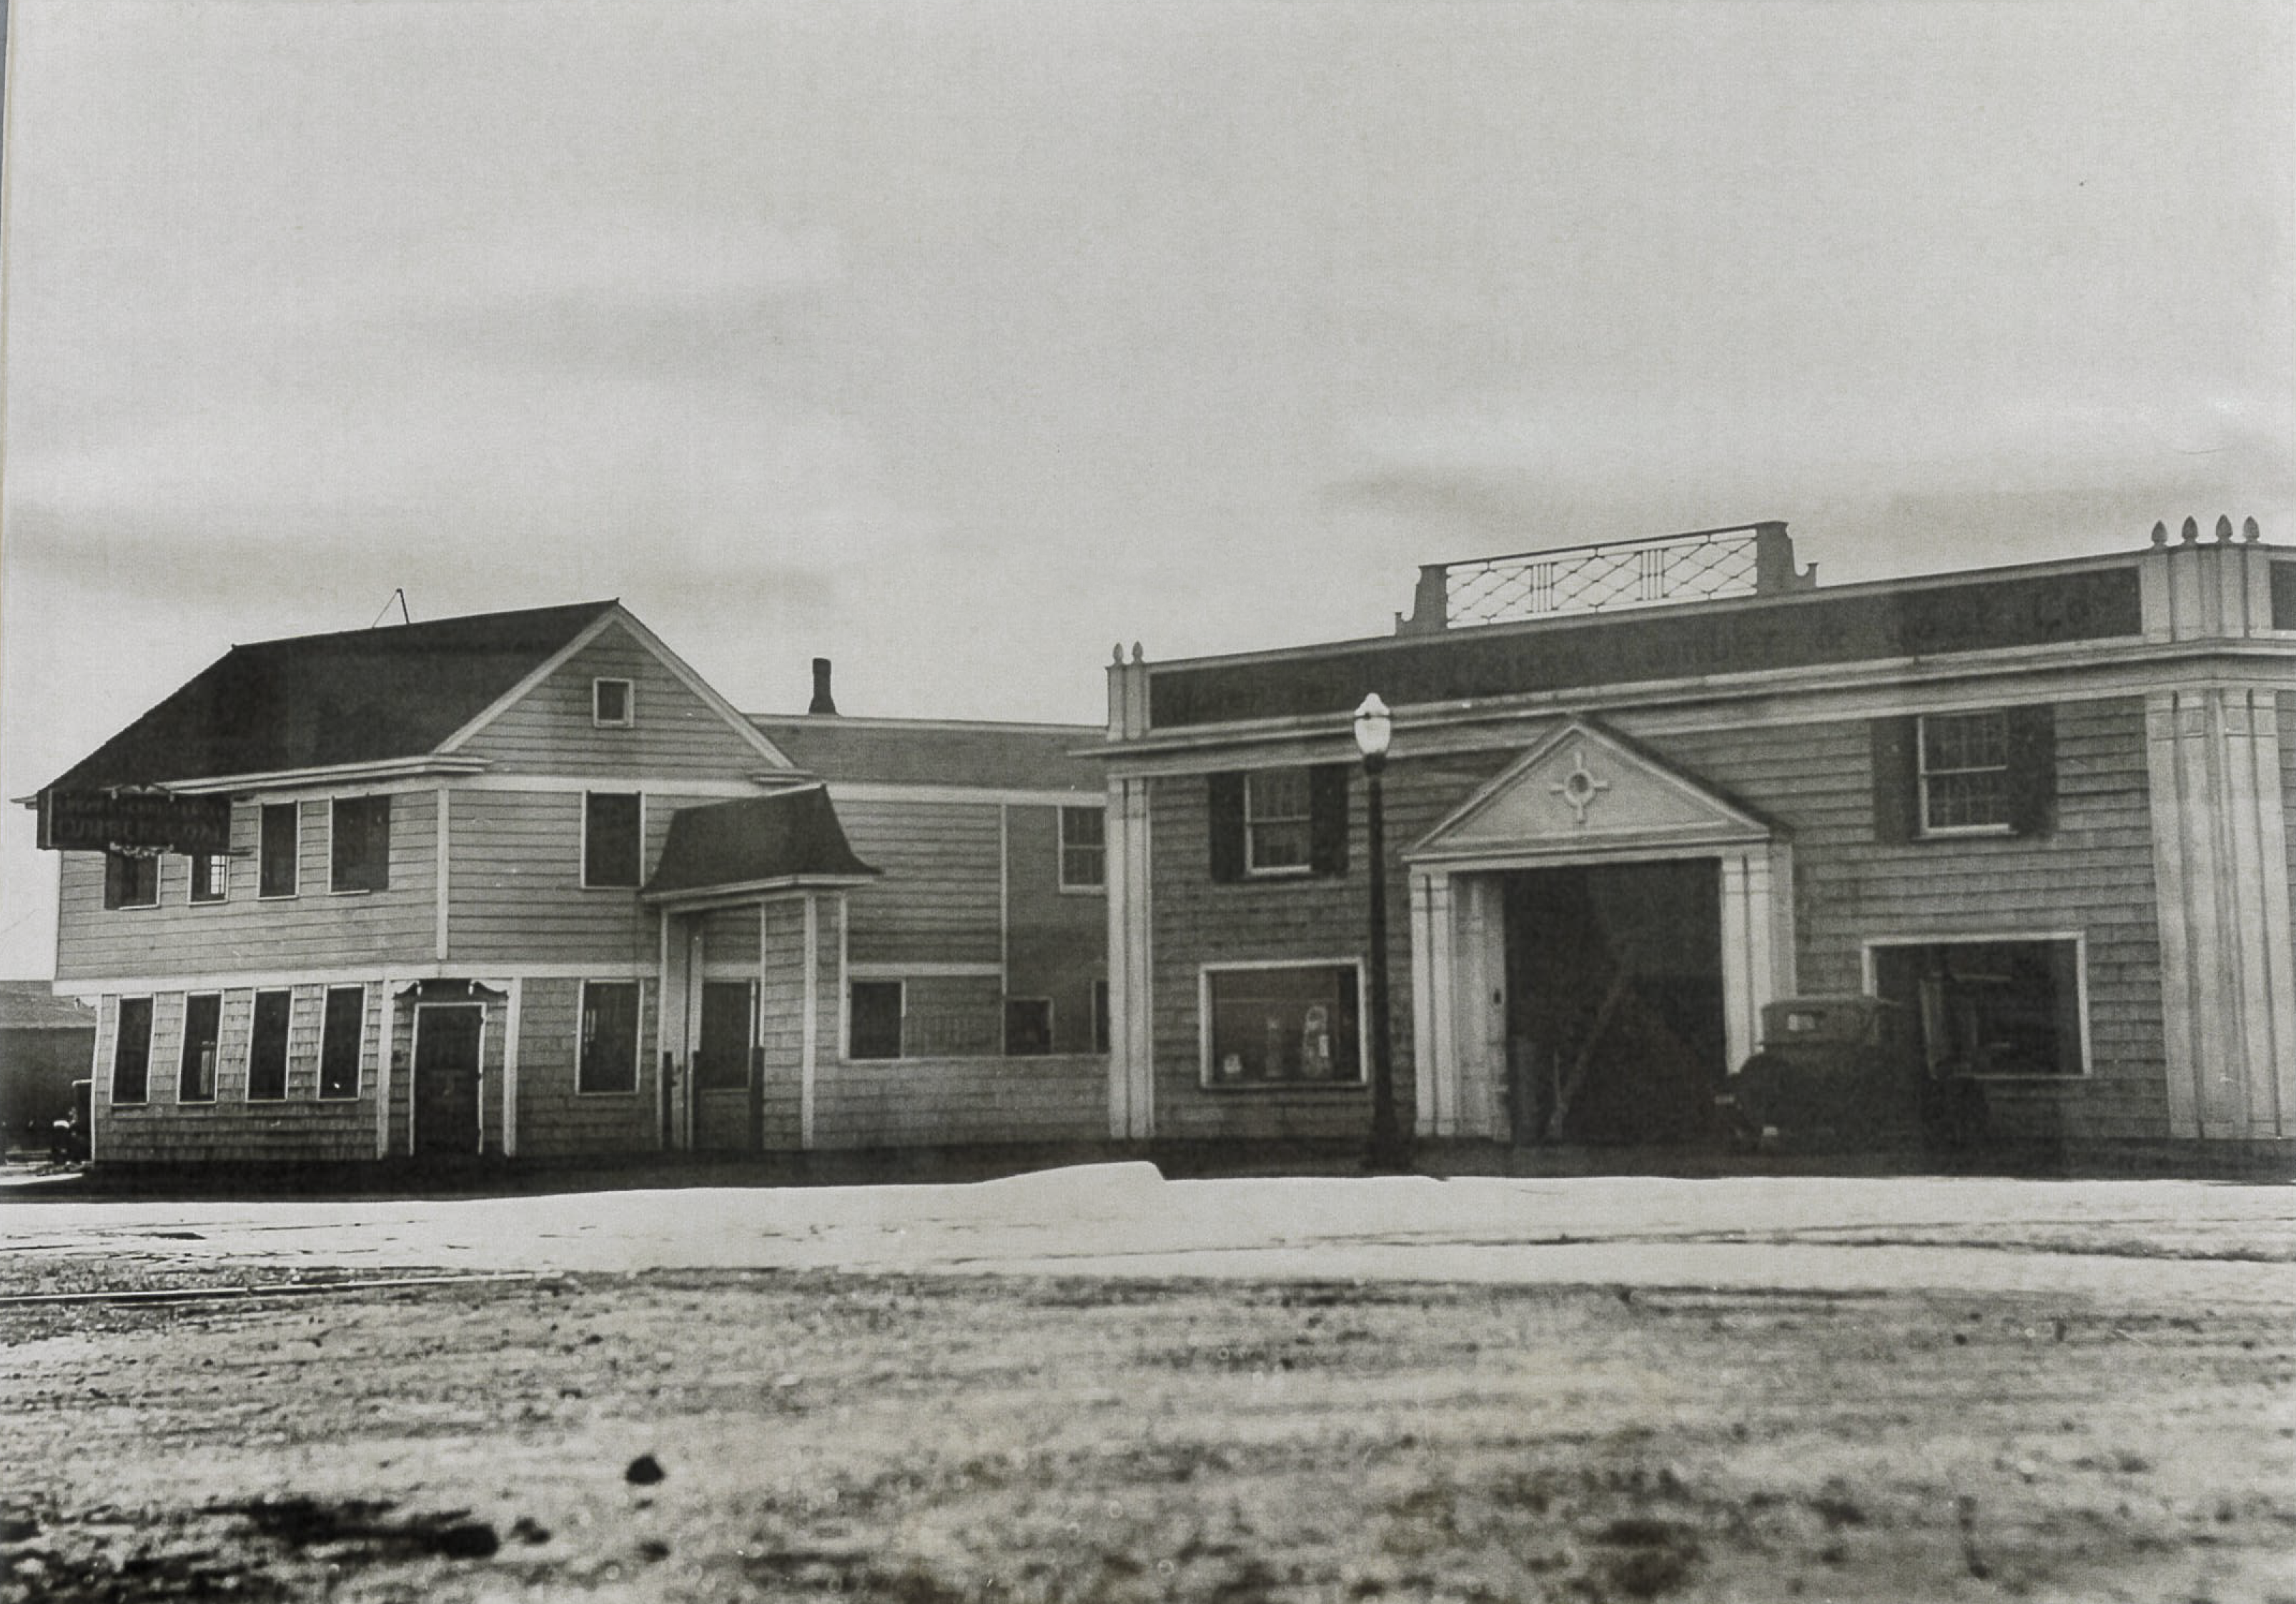 Luehrs-Christensen Lumber & Coal Co. building, 1940s